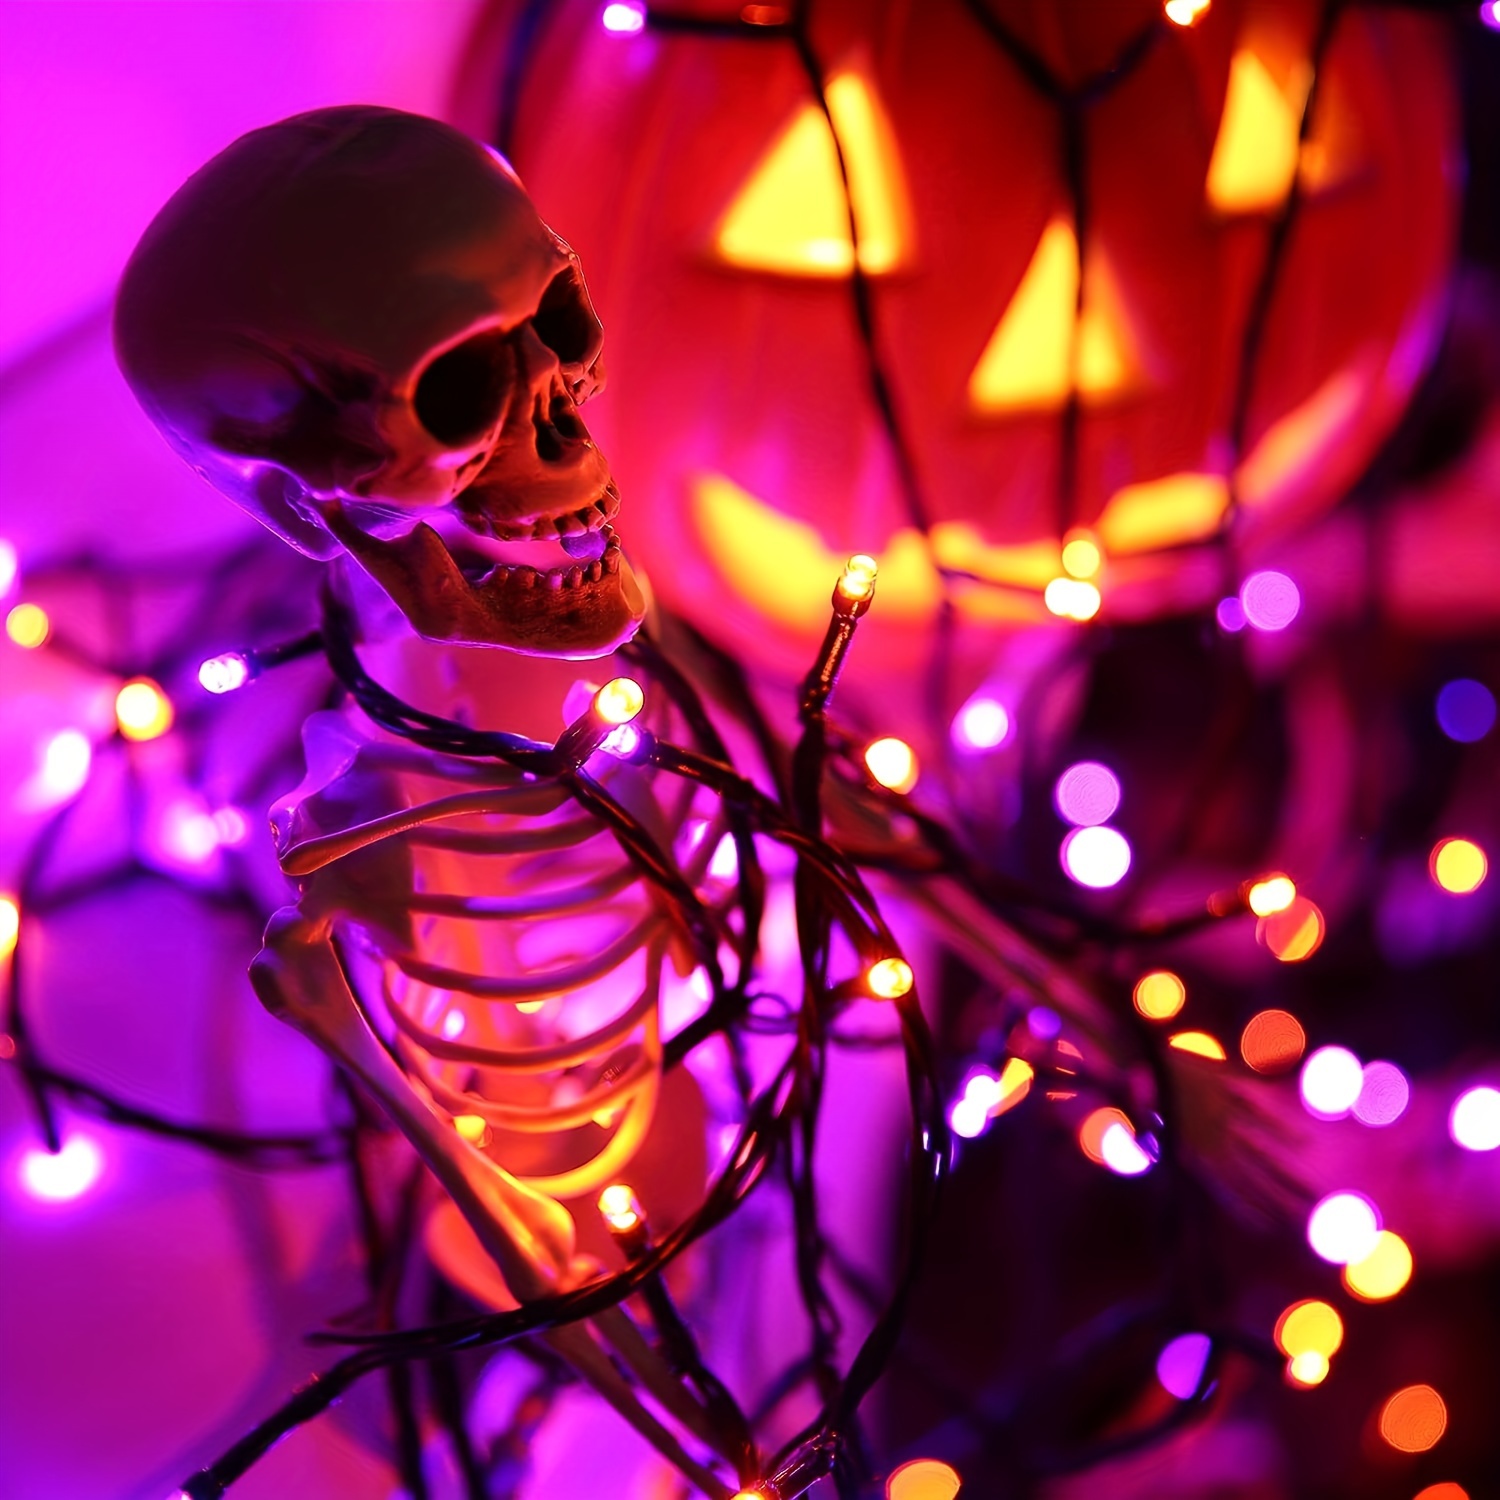  Skeleton Model Halloween String Lights, Halloween String  Lights, Horrible Skeleton Model String Lights, Halloween Party Lights for  Outside,House, Garden, Yard : Tools & Home Improvement